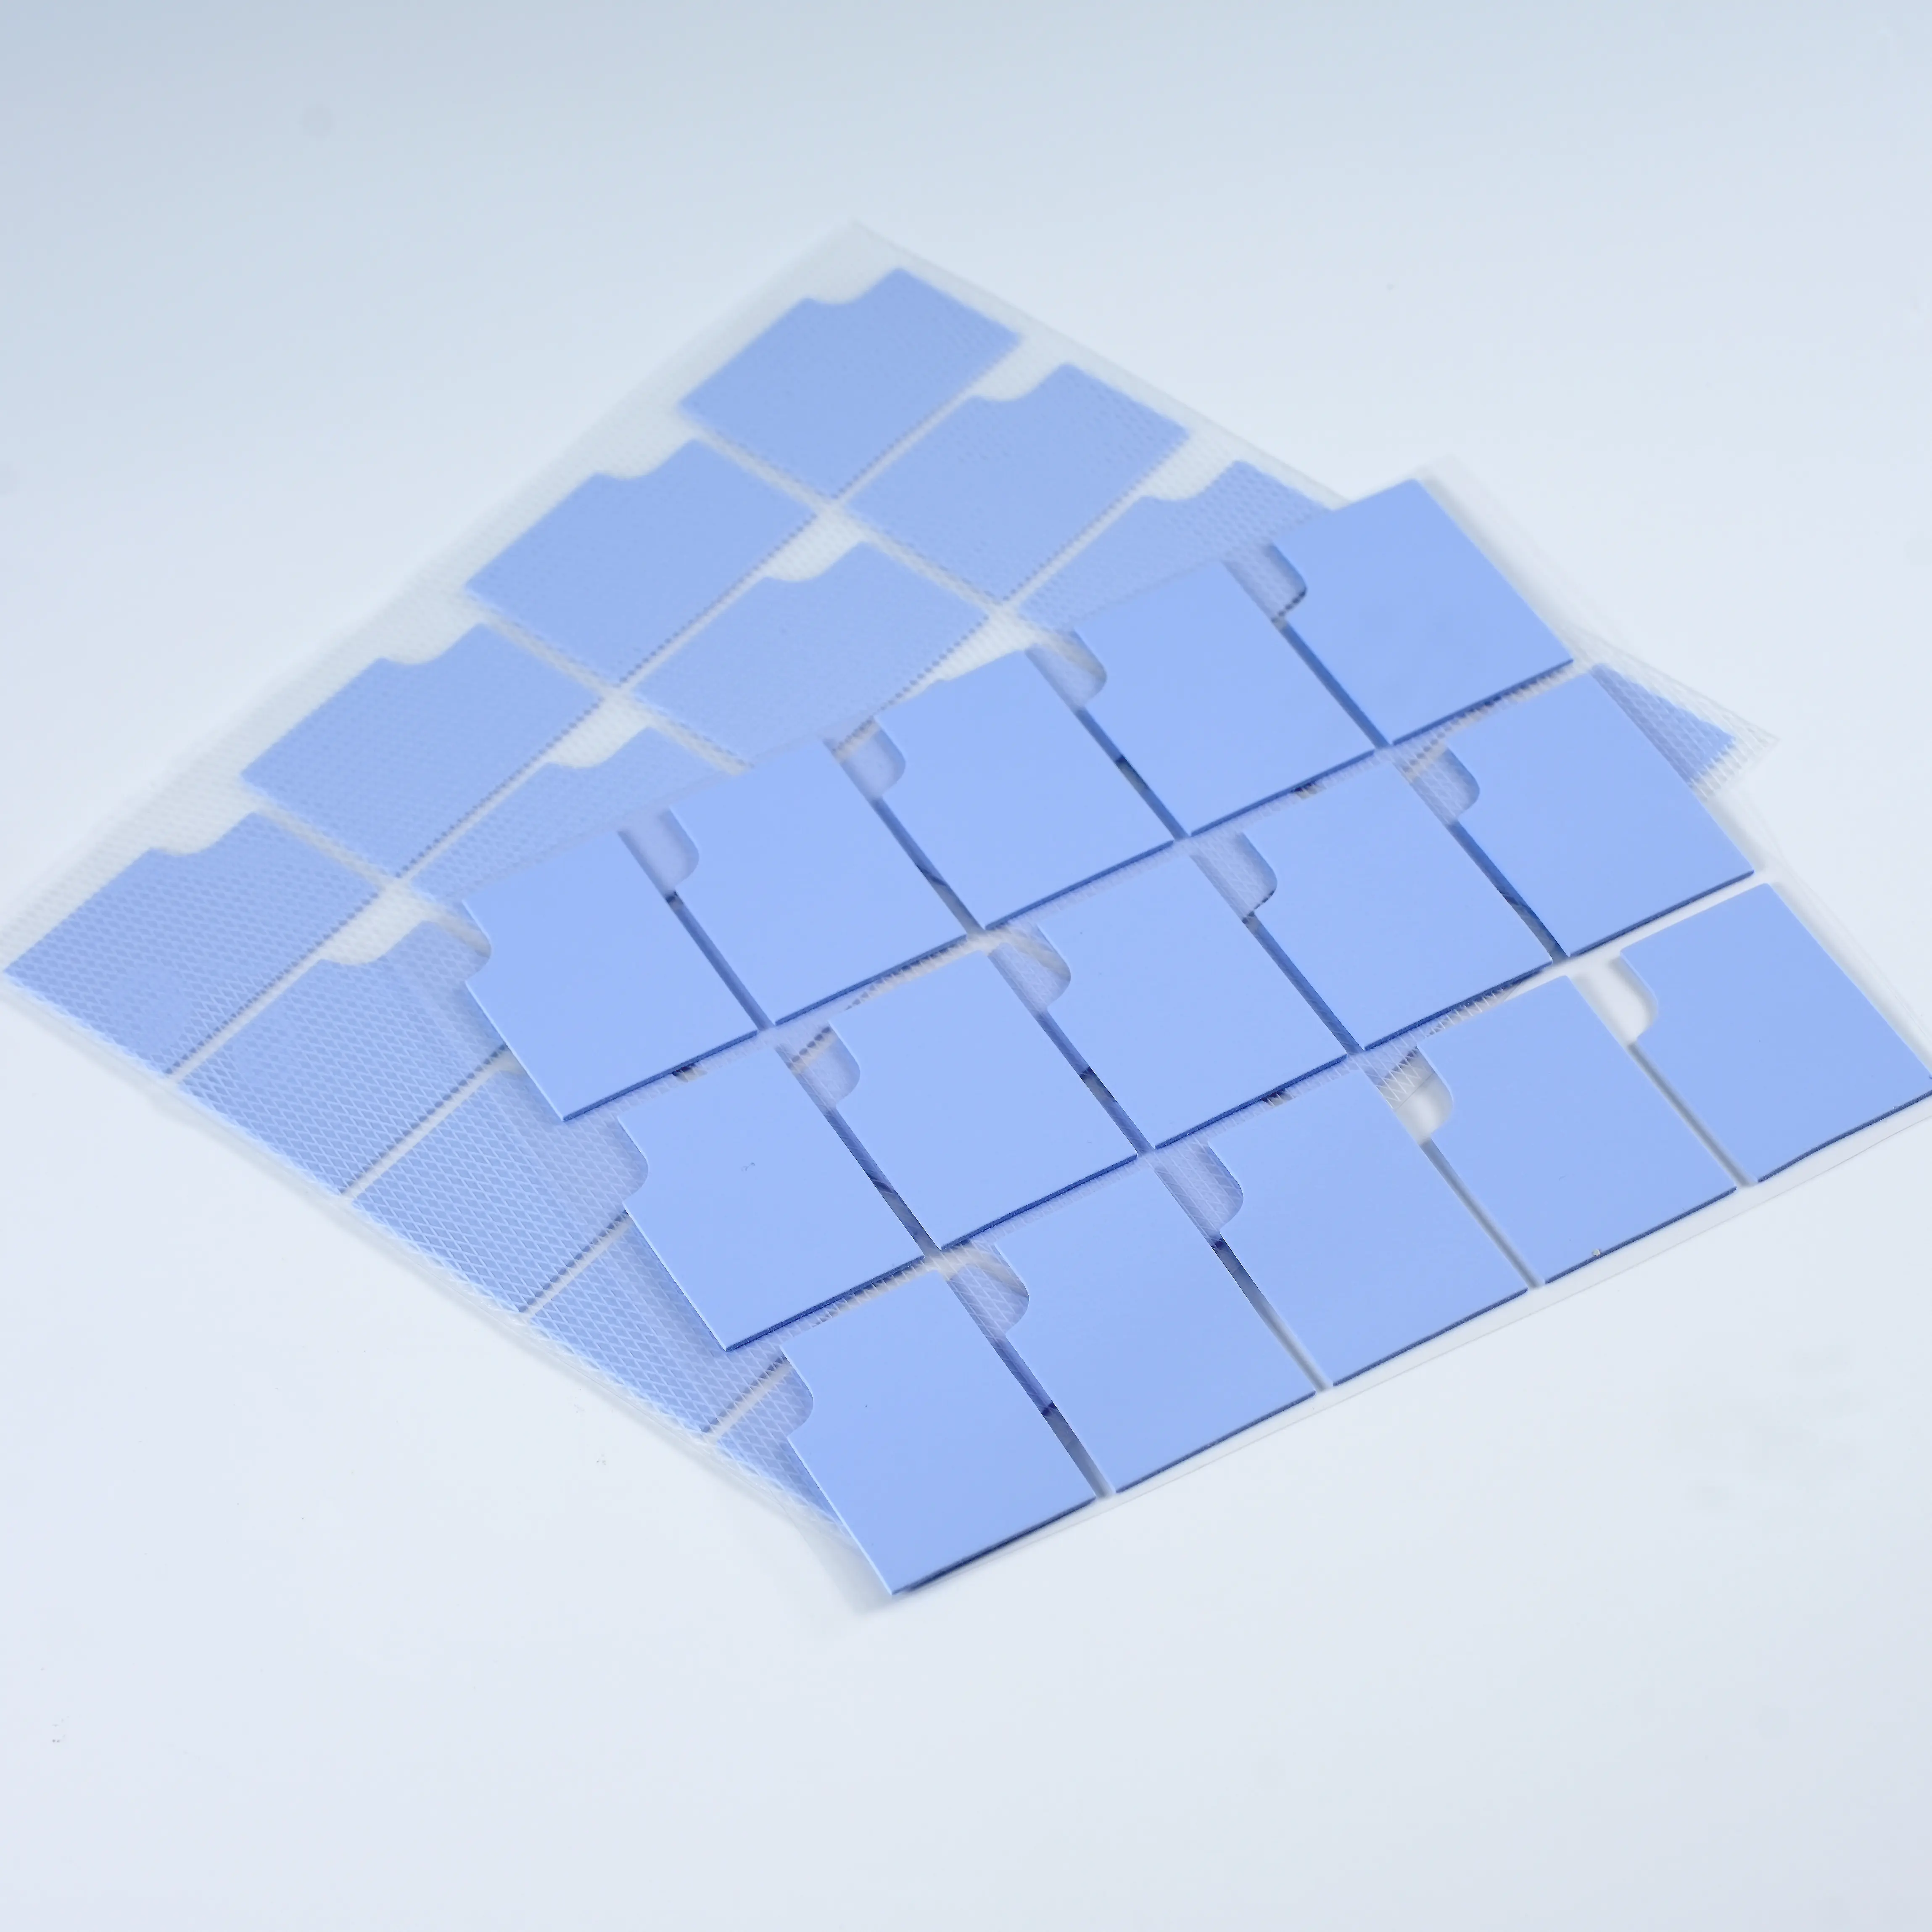 Haopta hot sales thermal conductive silicone pad thermal pad silicone for nvme ssd silicone roll thermal pad suit for Cpu GPU